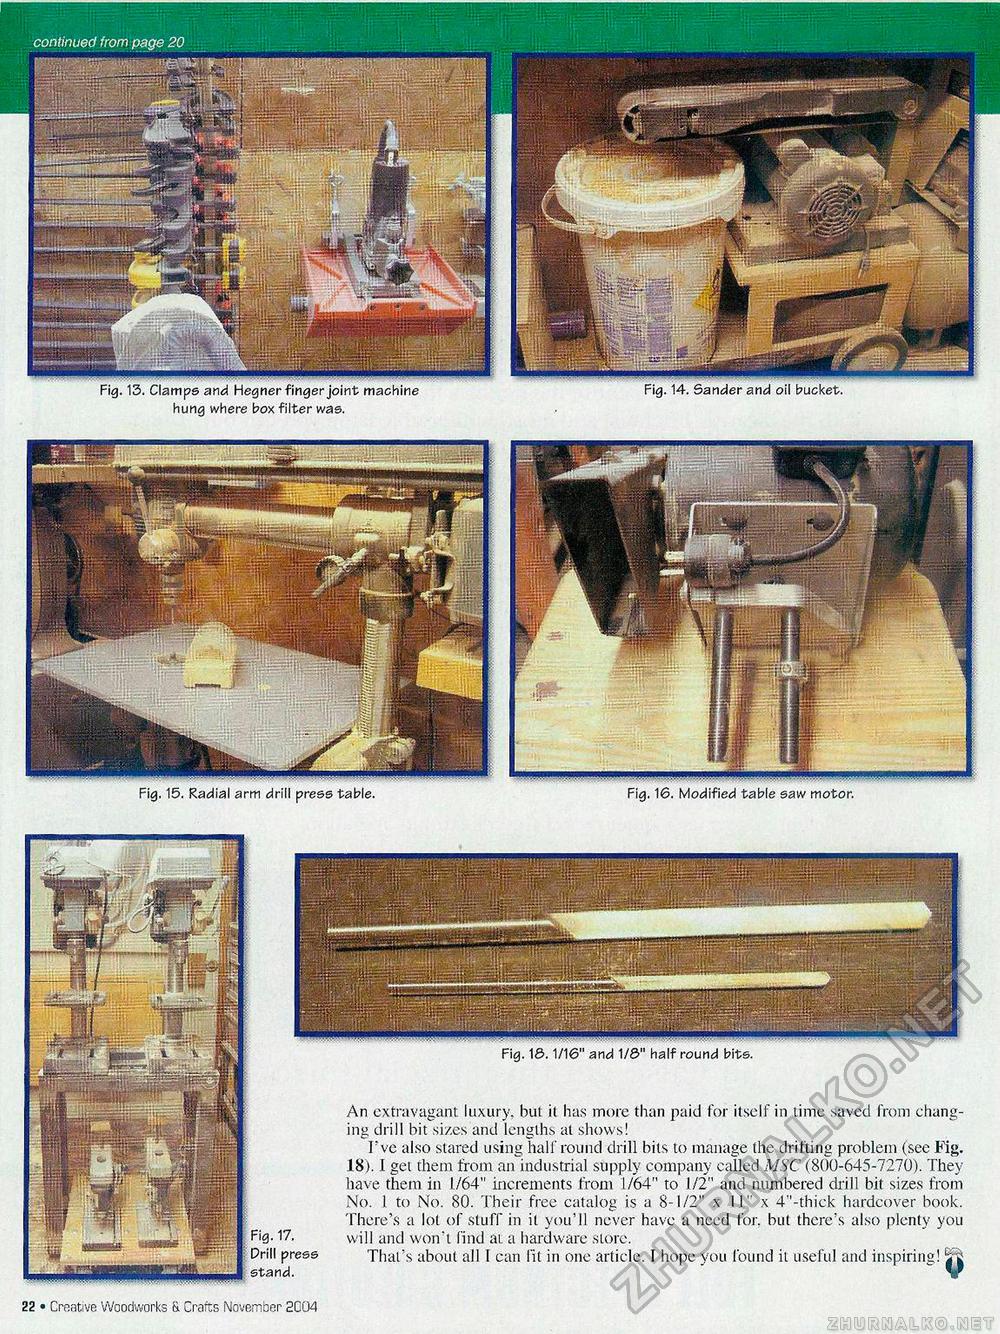 Creative Woodworks & crafts 2004-11,  22